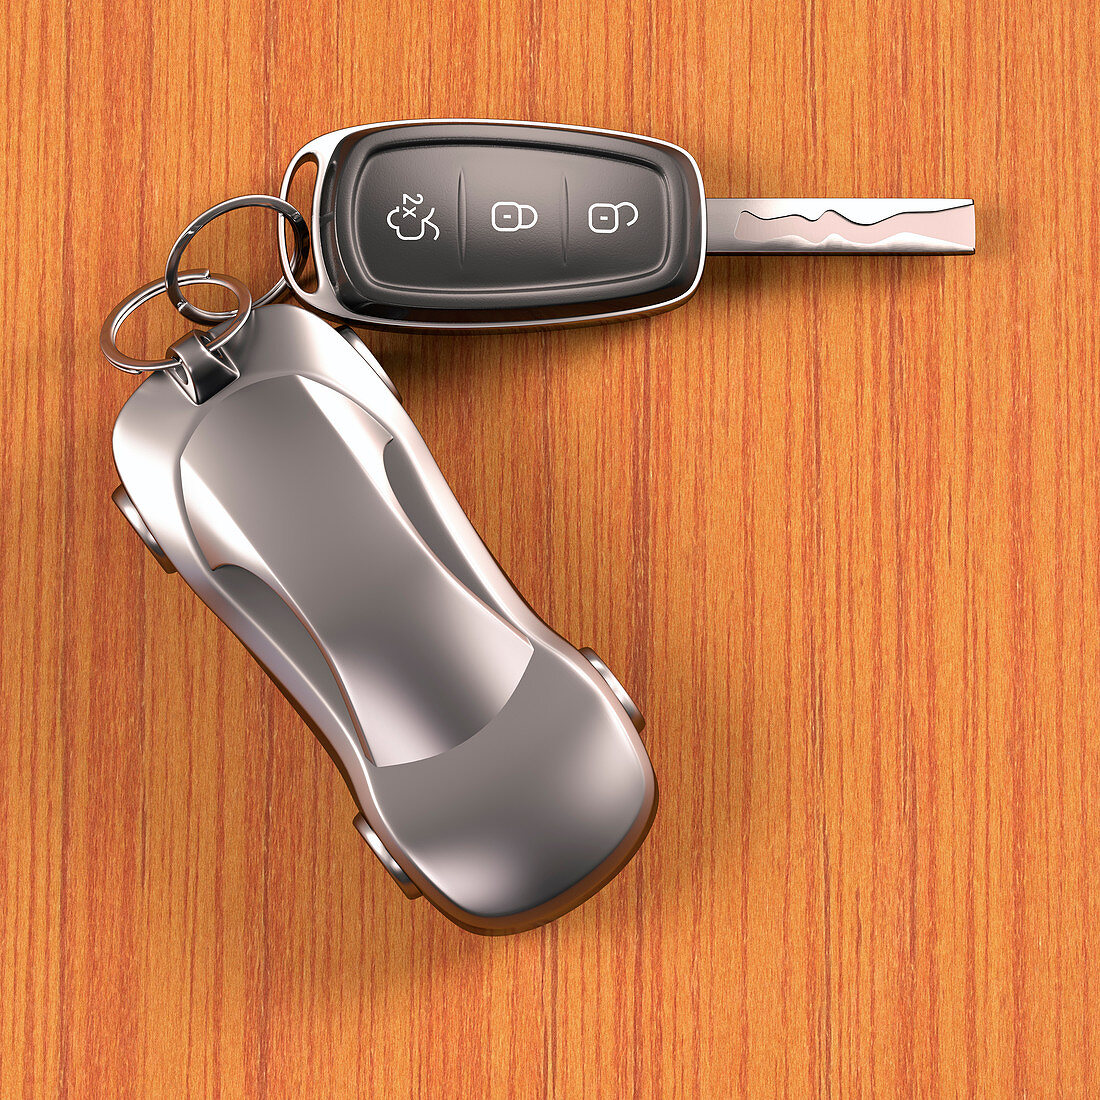 Car key and key ring